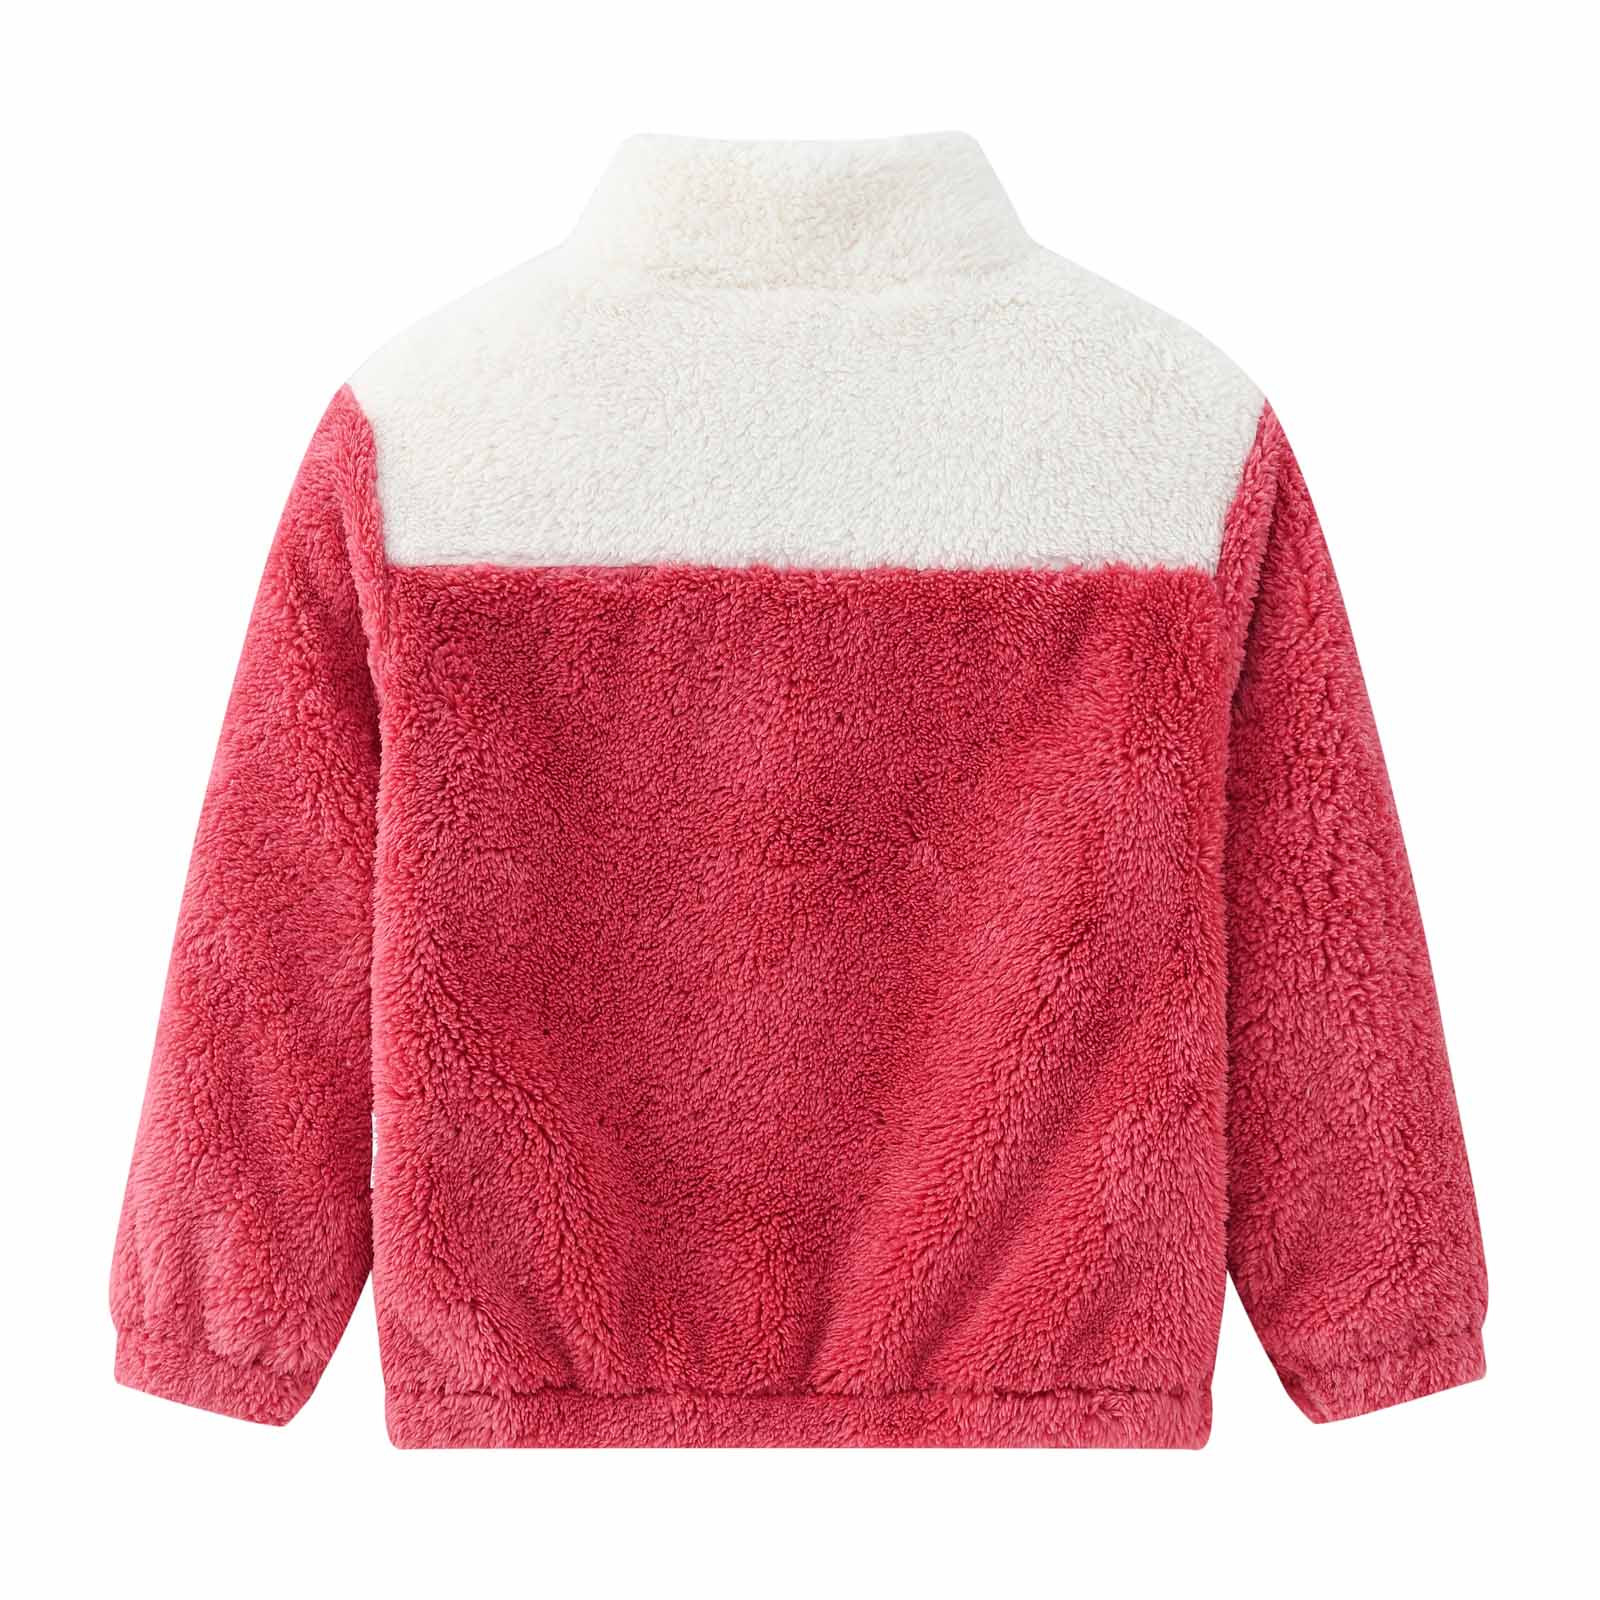 YYDGH Girls Zipper Jacket Fuzzy Sweatshirt Long Sleeve Casual Cozy Fleece Sherpa Outwear Coat Full-Zip Rainbow Jackets(Red,3-4 Years) - image 4 of 8